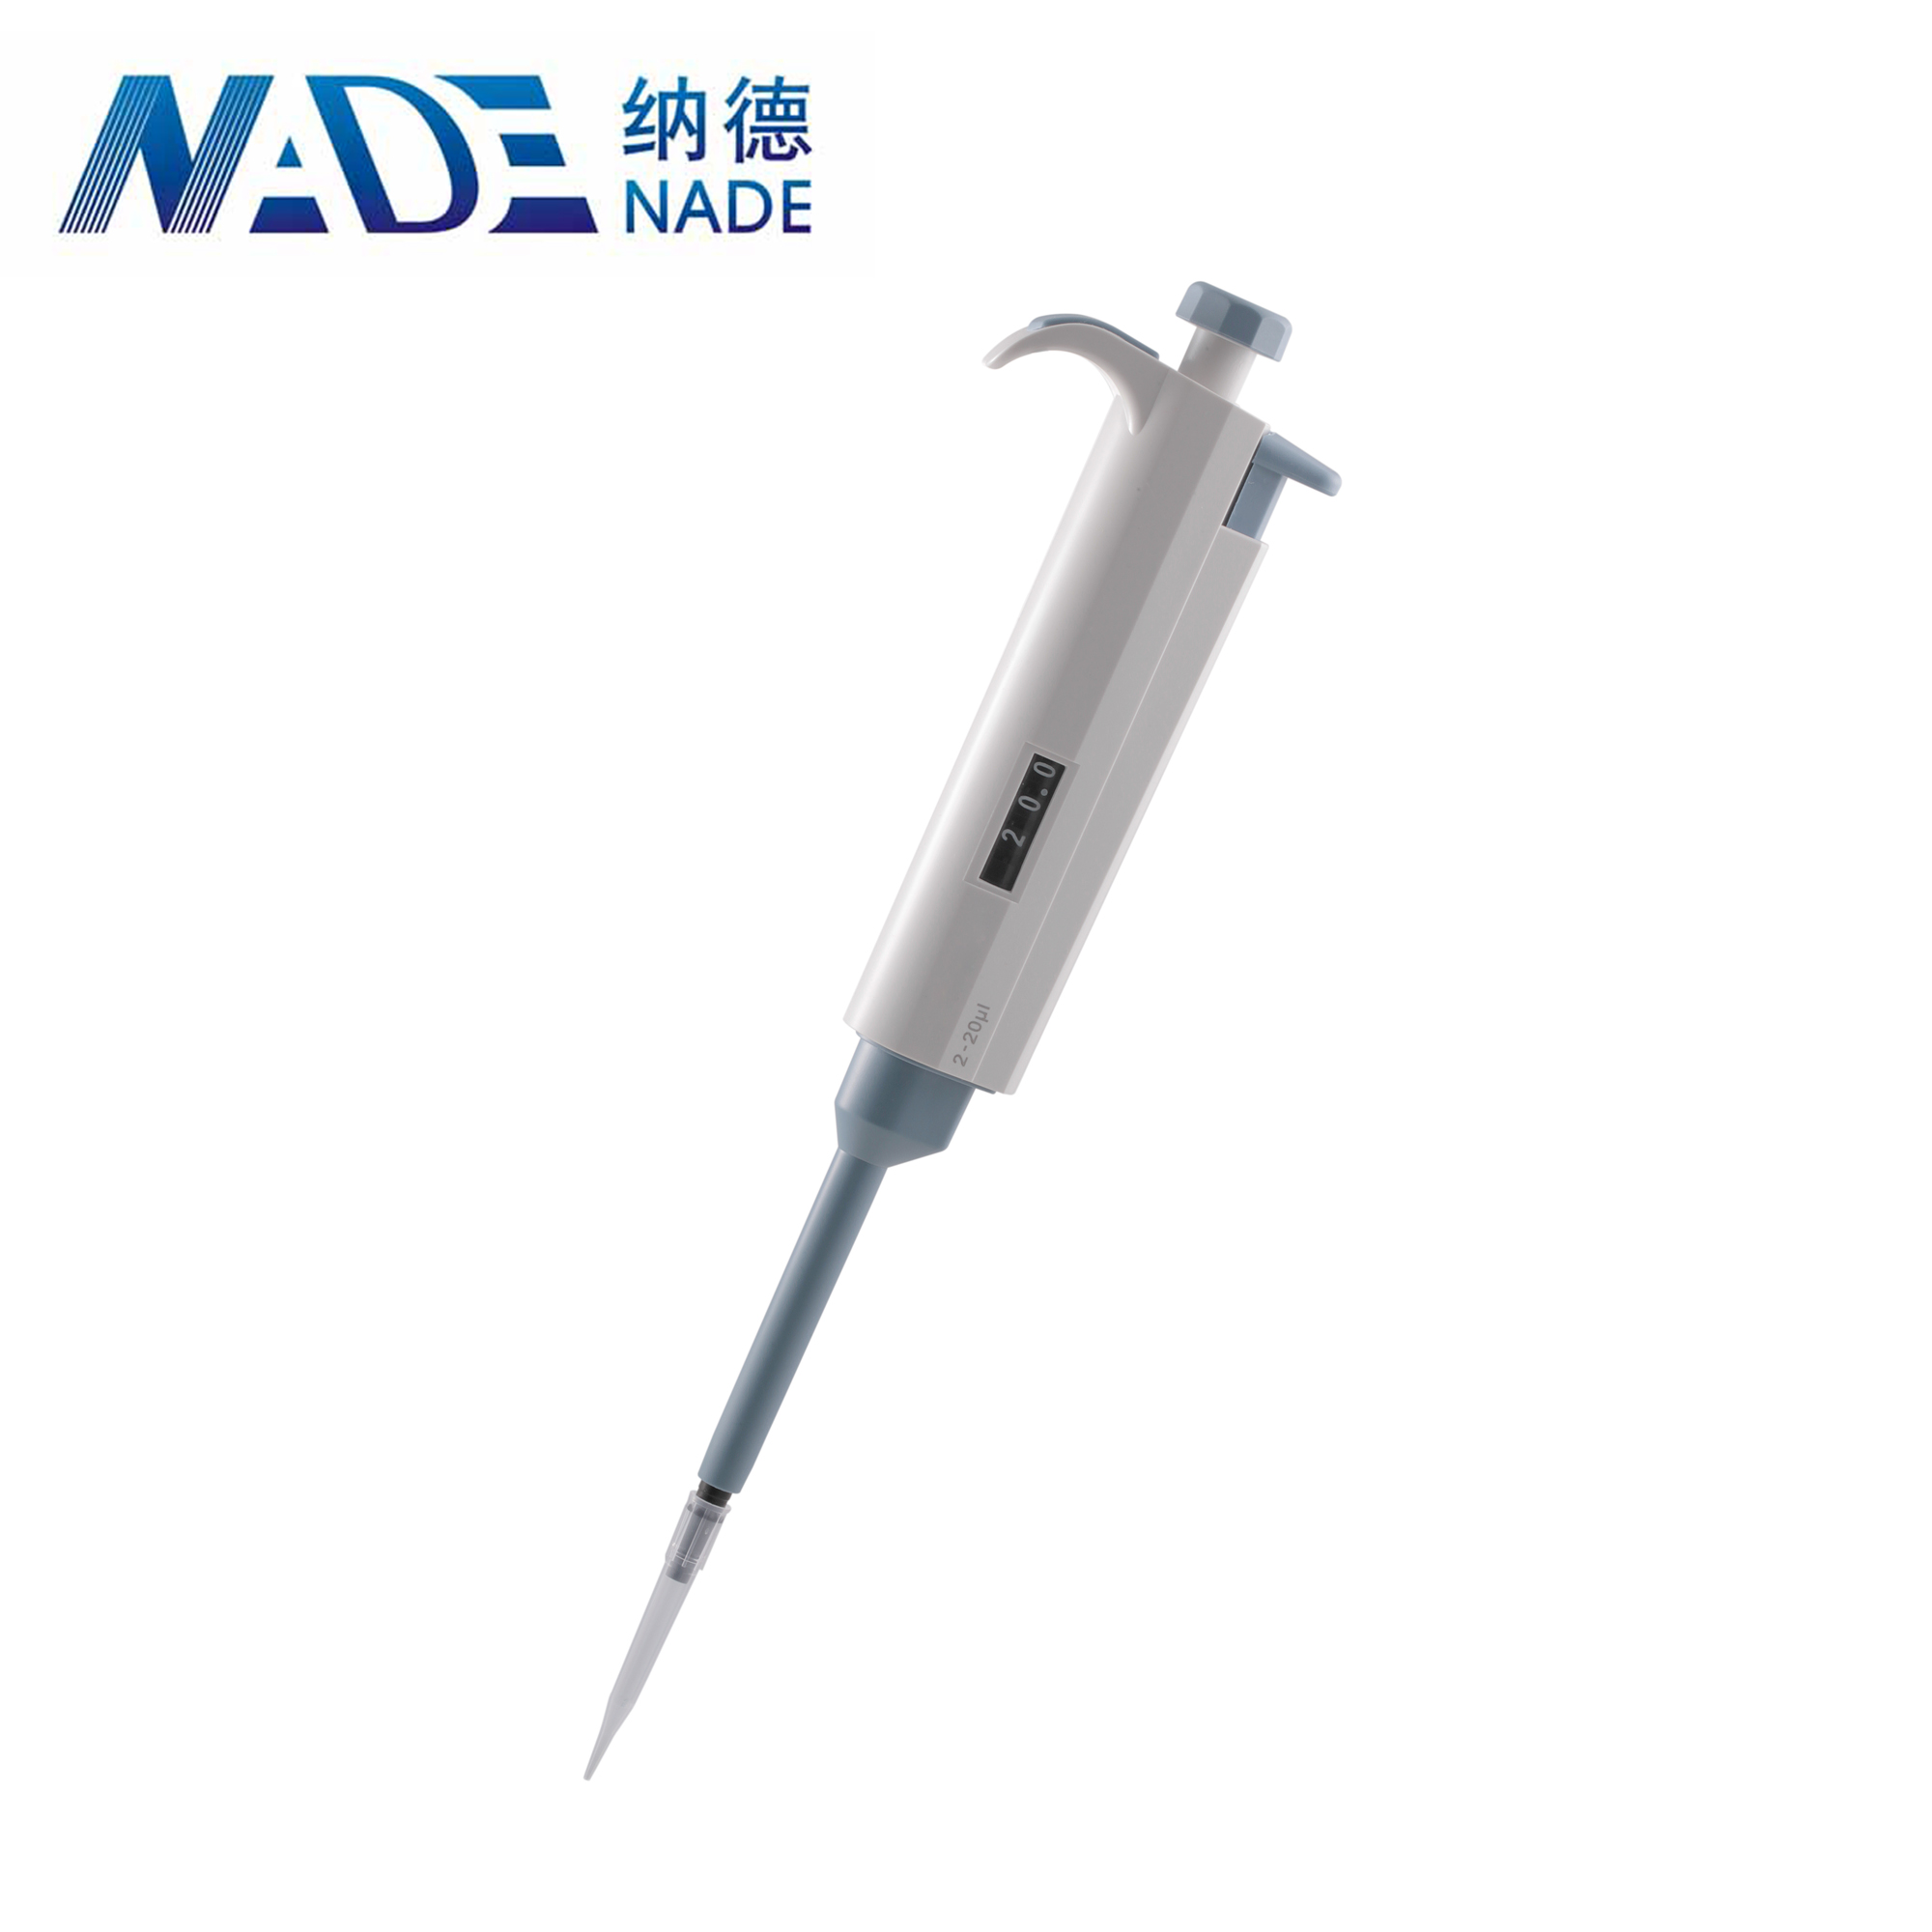 Nade Adjustable Top pipette 711111060000 5-50ul disposable laboratory micro pipette